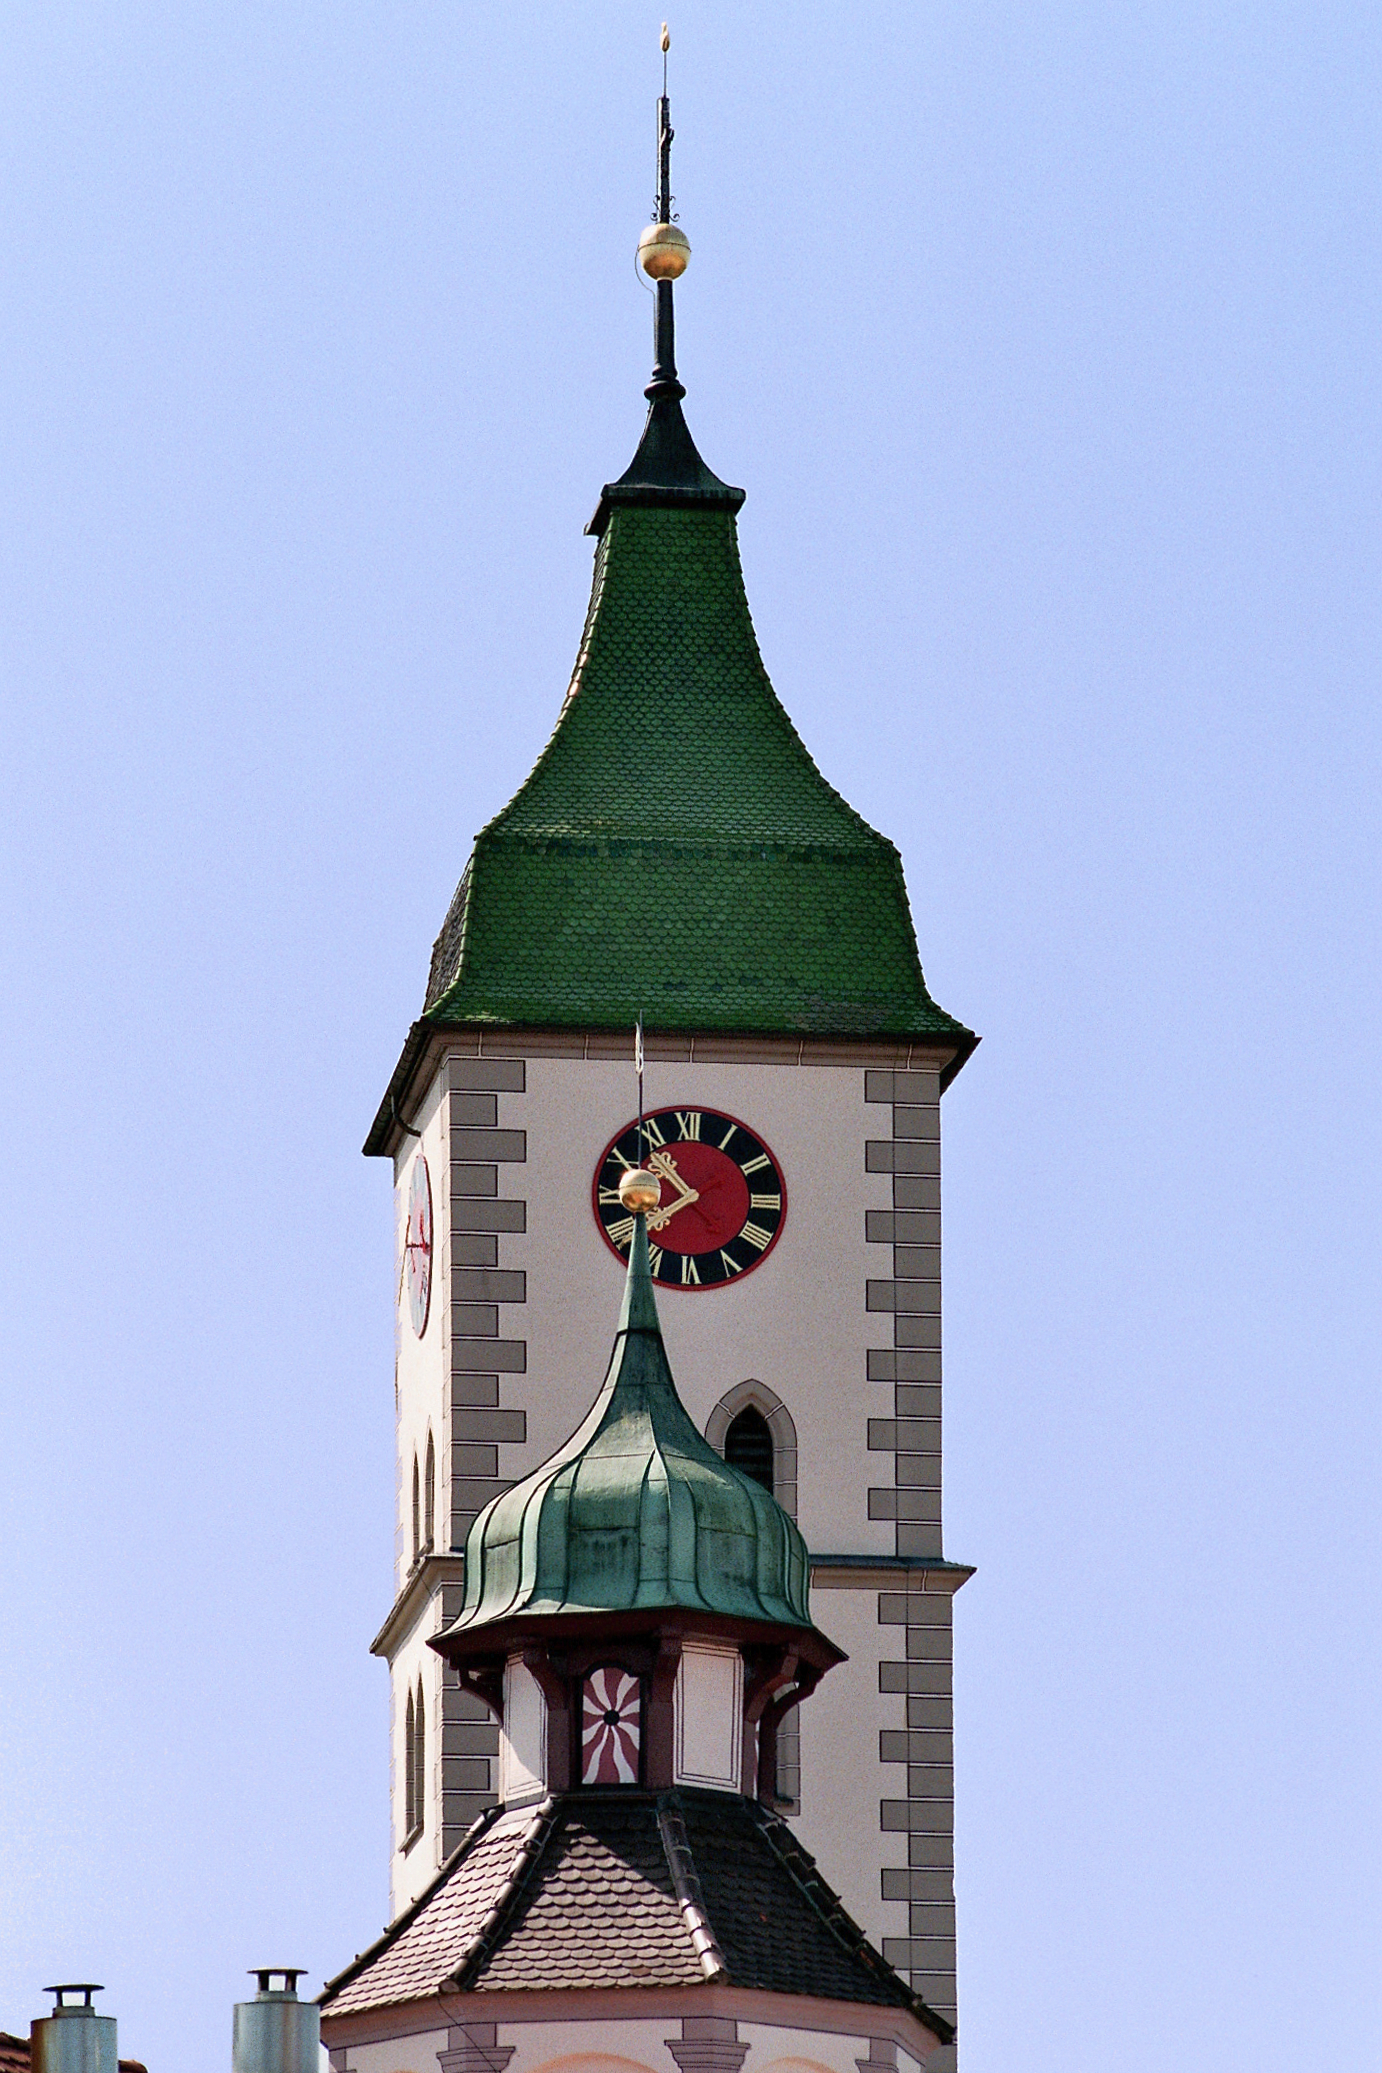 St_Martins_Kirche_Kirchturm in Wangen in der Nähe der St. Martins Apotheke